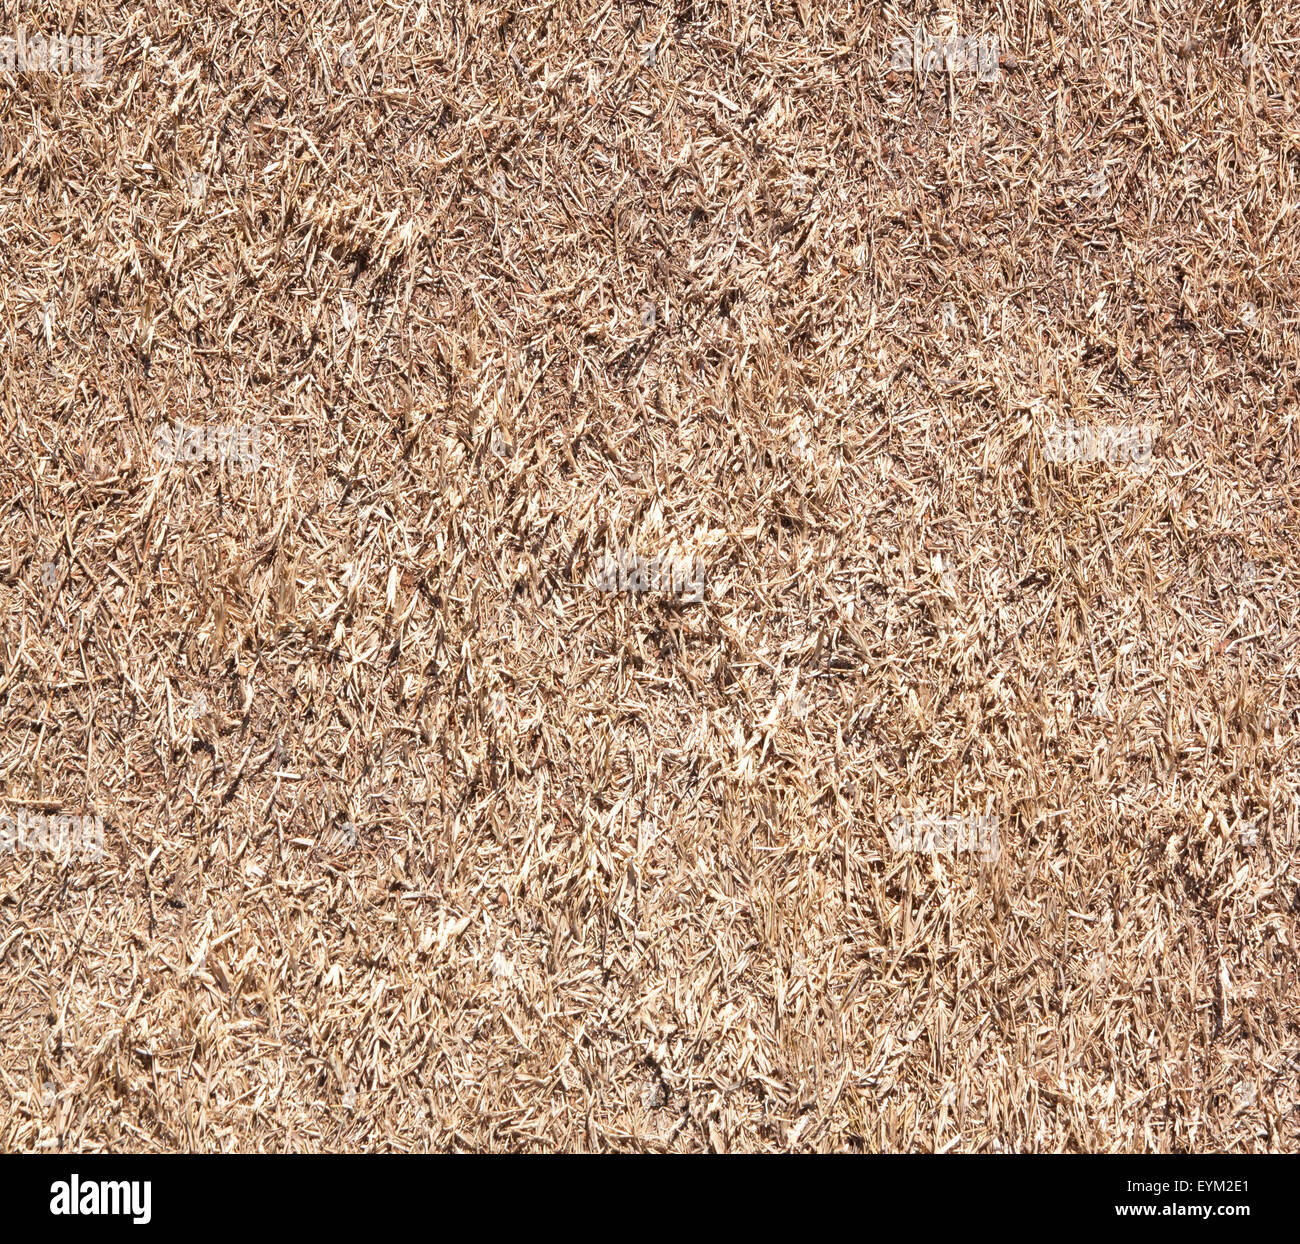 Tote Rasen Hintergrund braun Trockenrasen, tot. Stockfoto